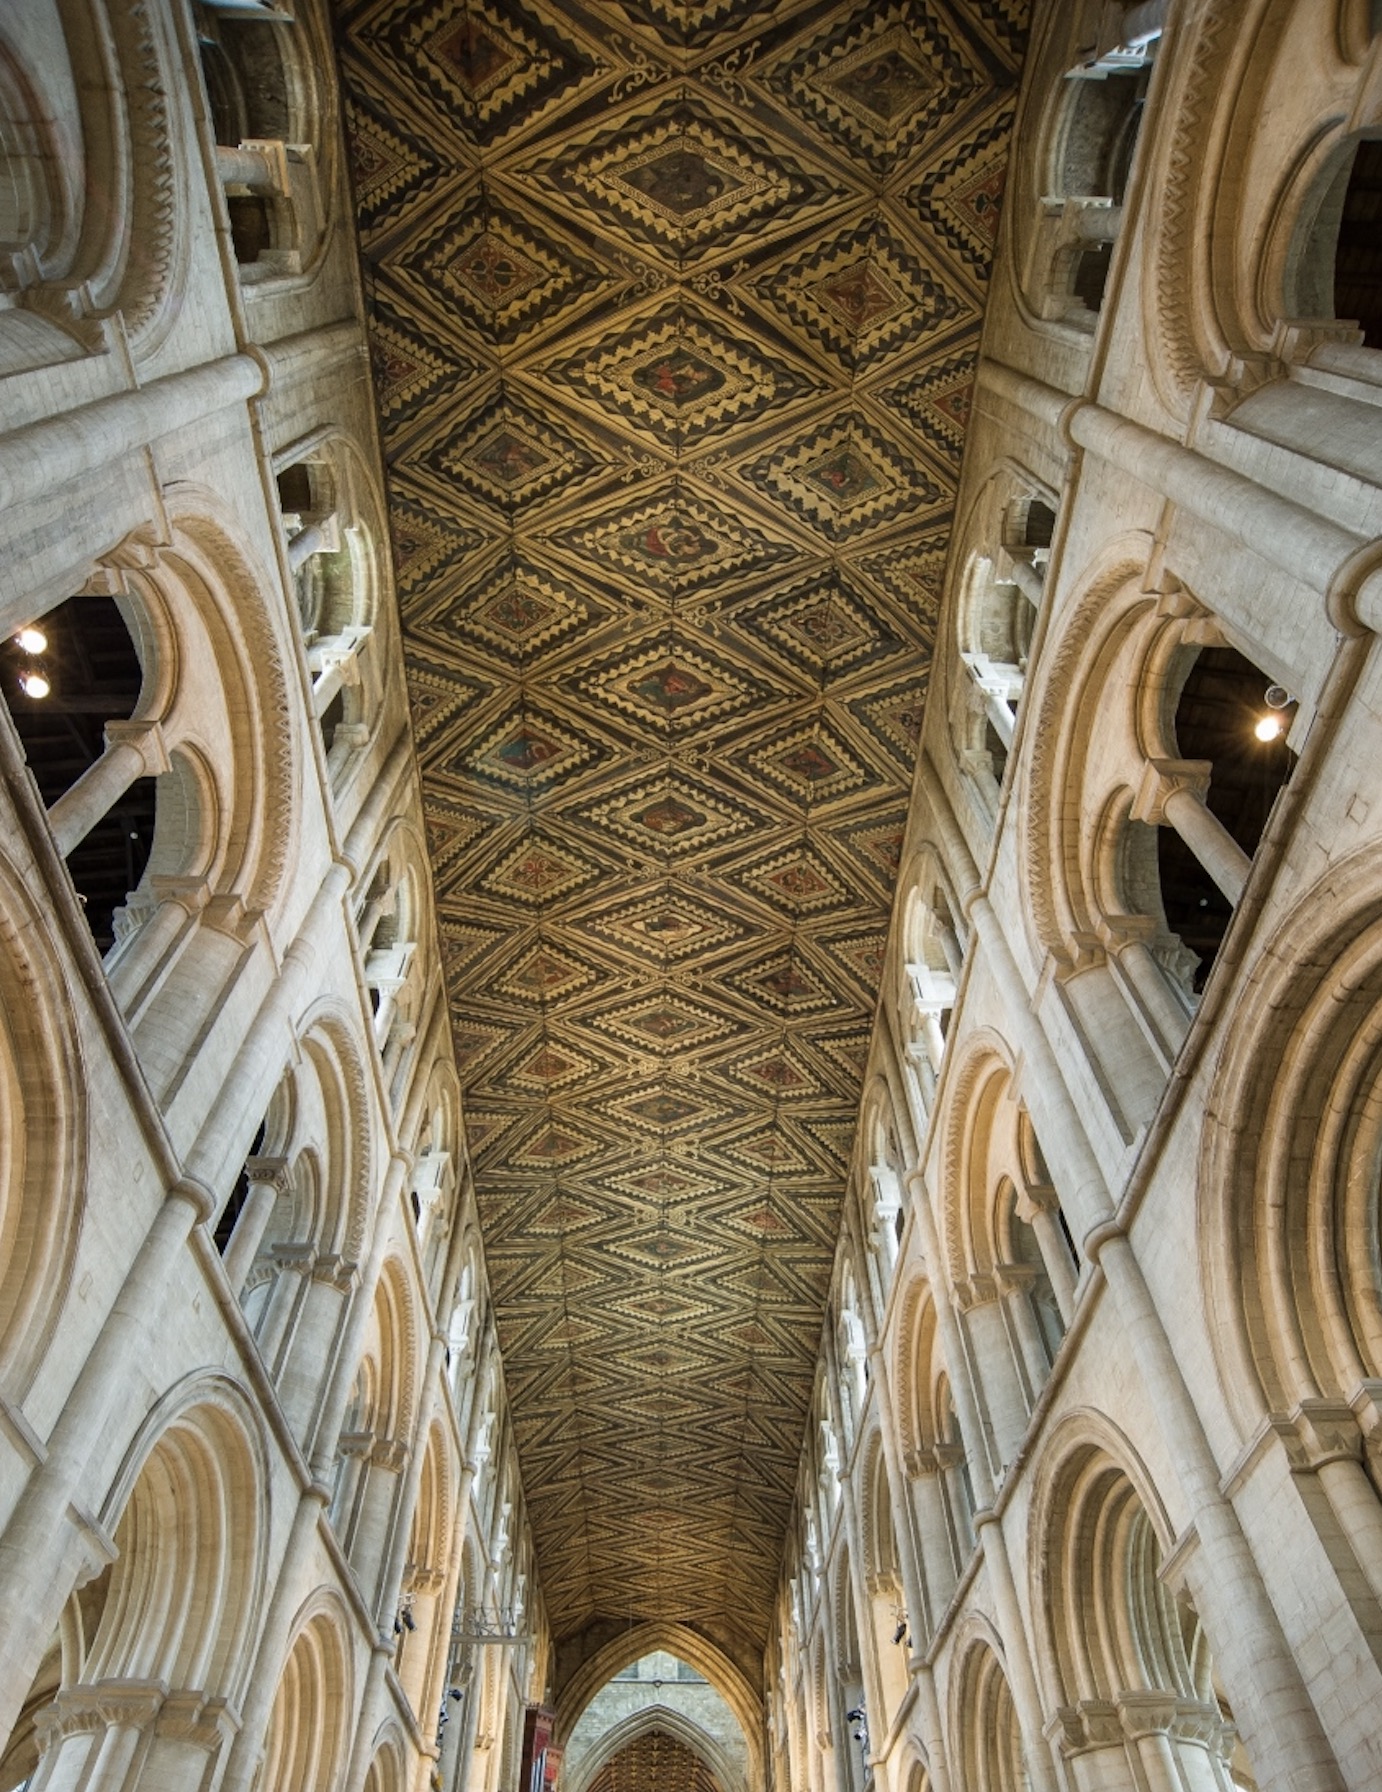 Peterborough Cathedral Ceilings - Always Look Up